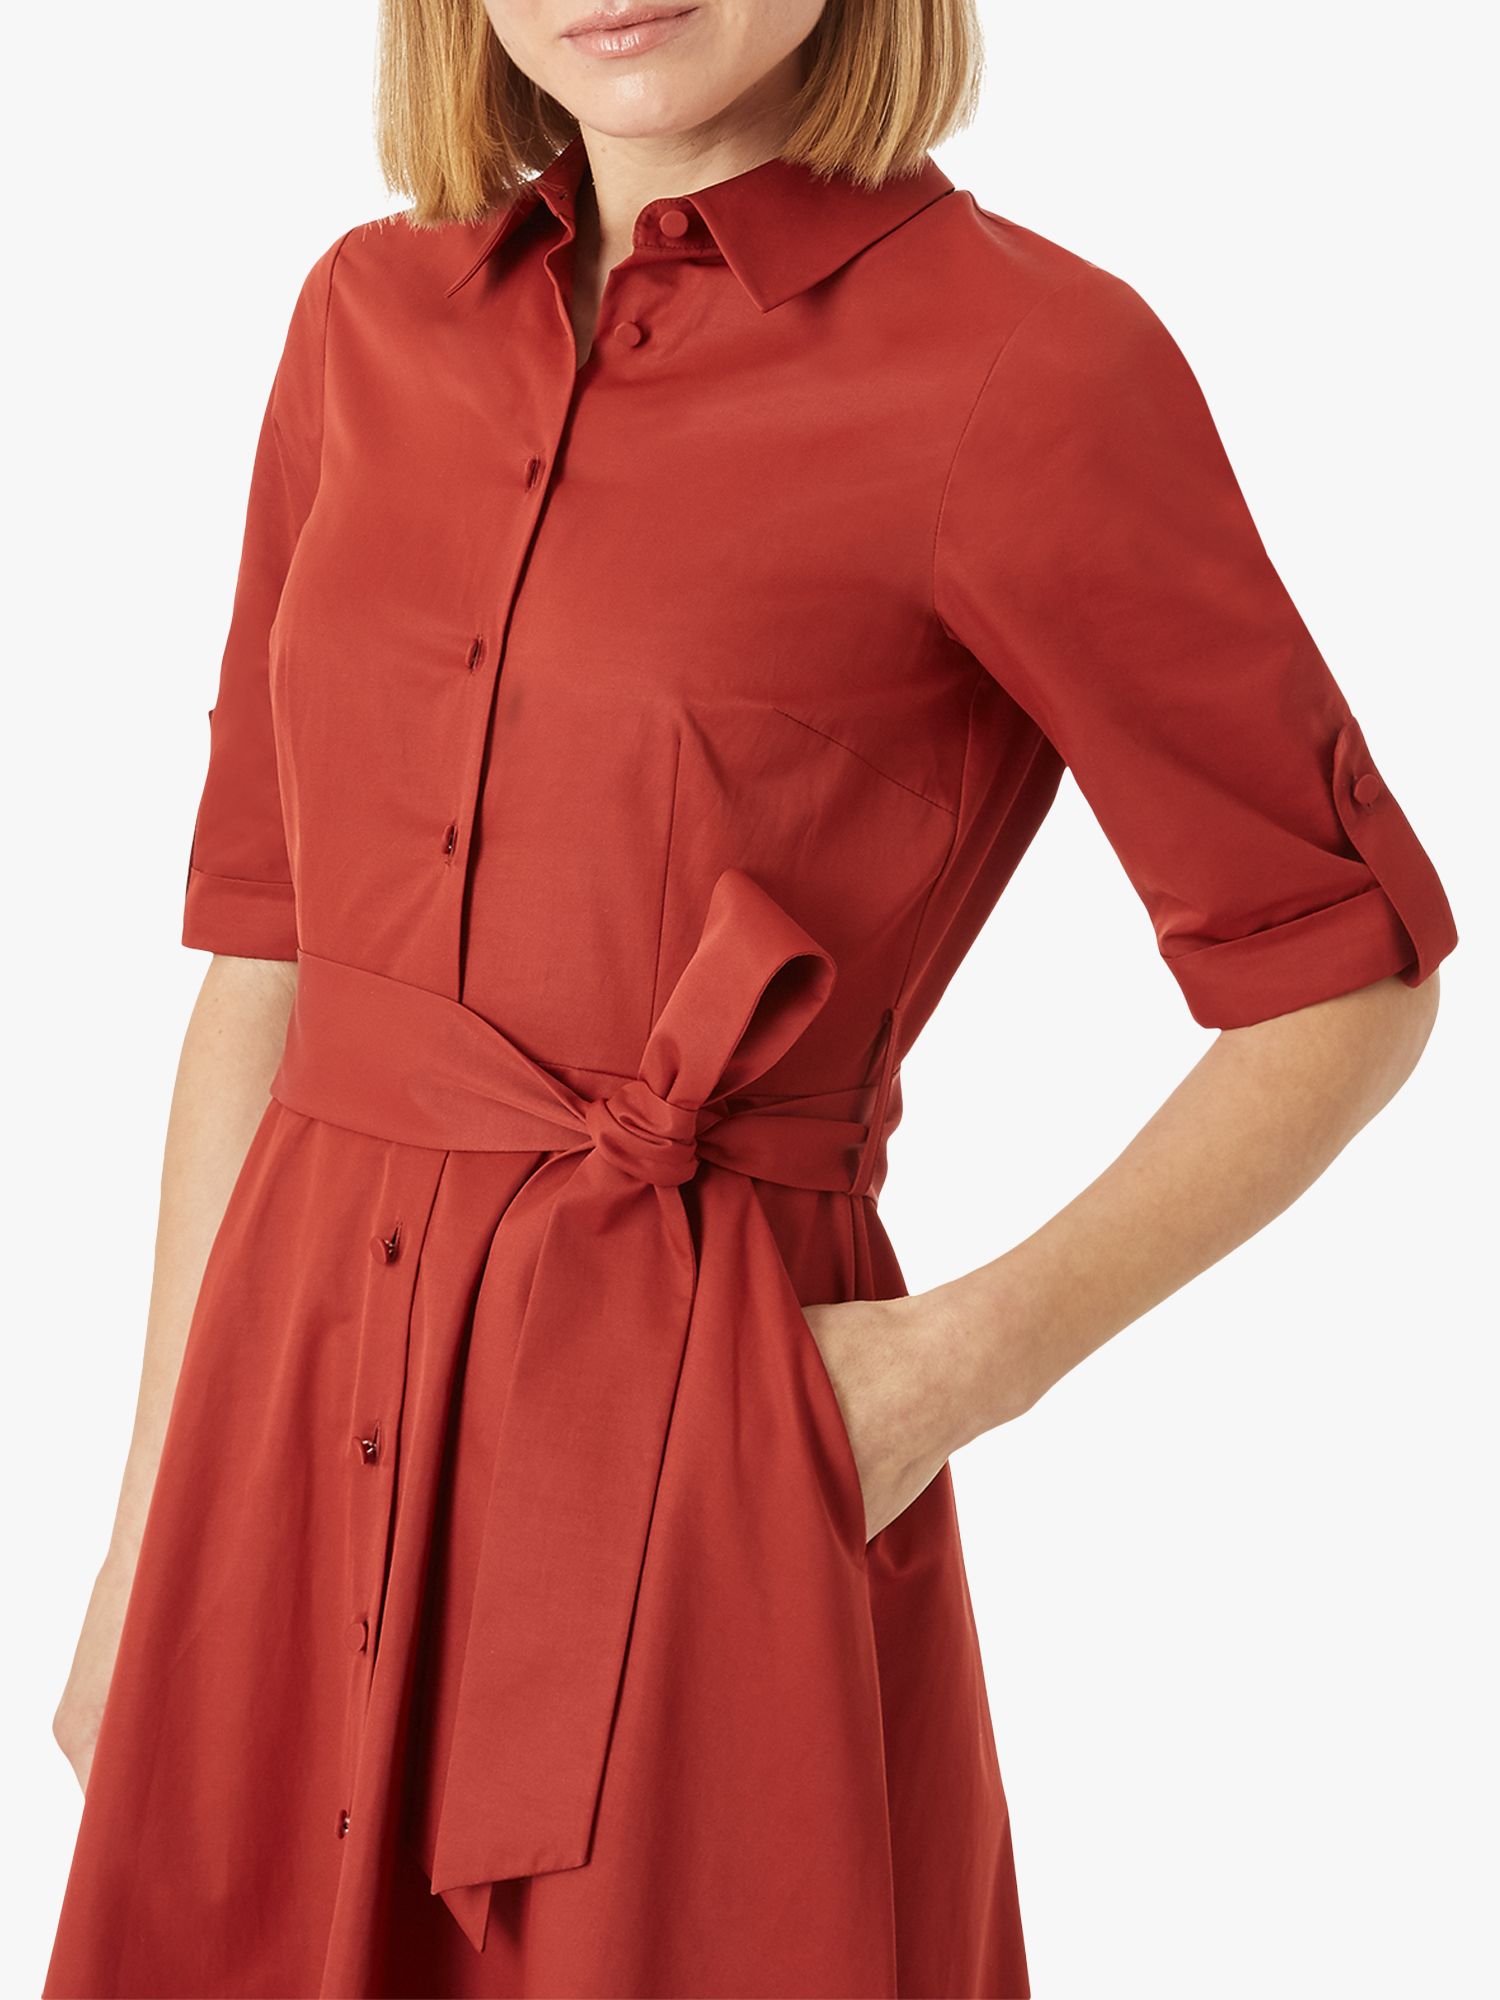 Hobbs Tyra Dress Flash Sales, 56% OFF | kangoojumps.com